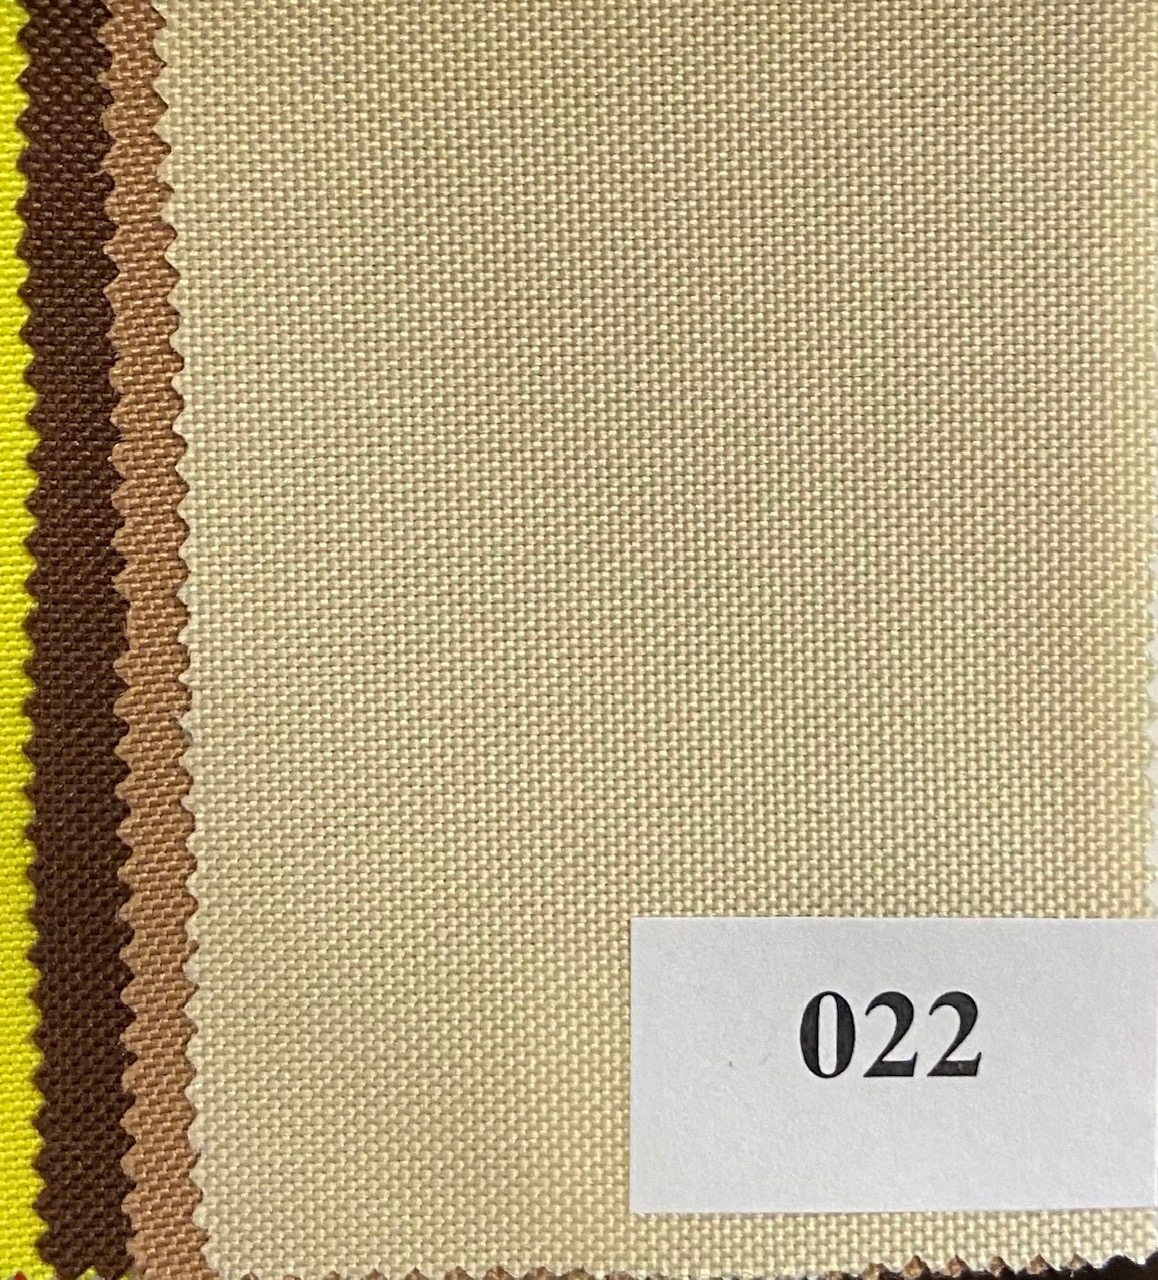 Oxford Fabric, weight 200g/m², width 160cm, light beige. Polyester PU.